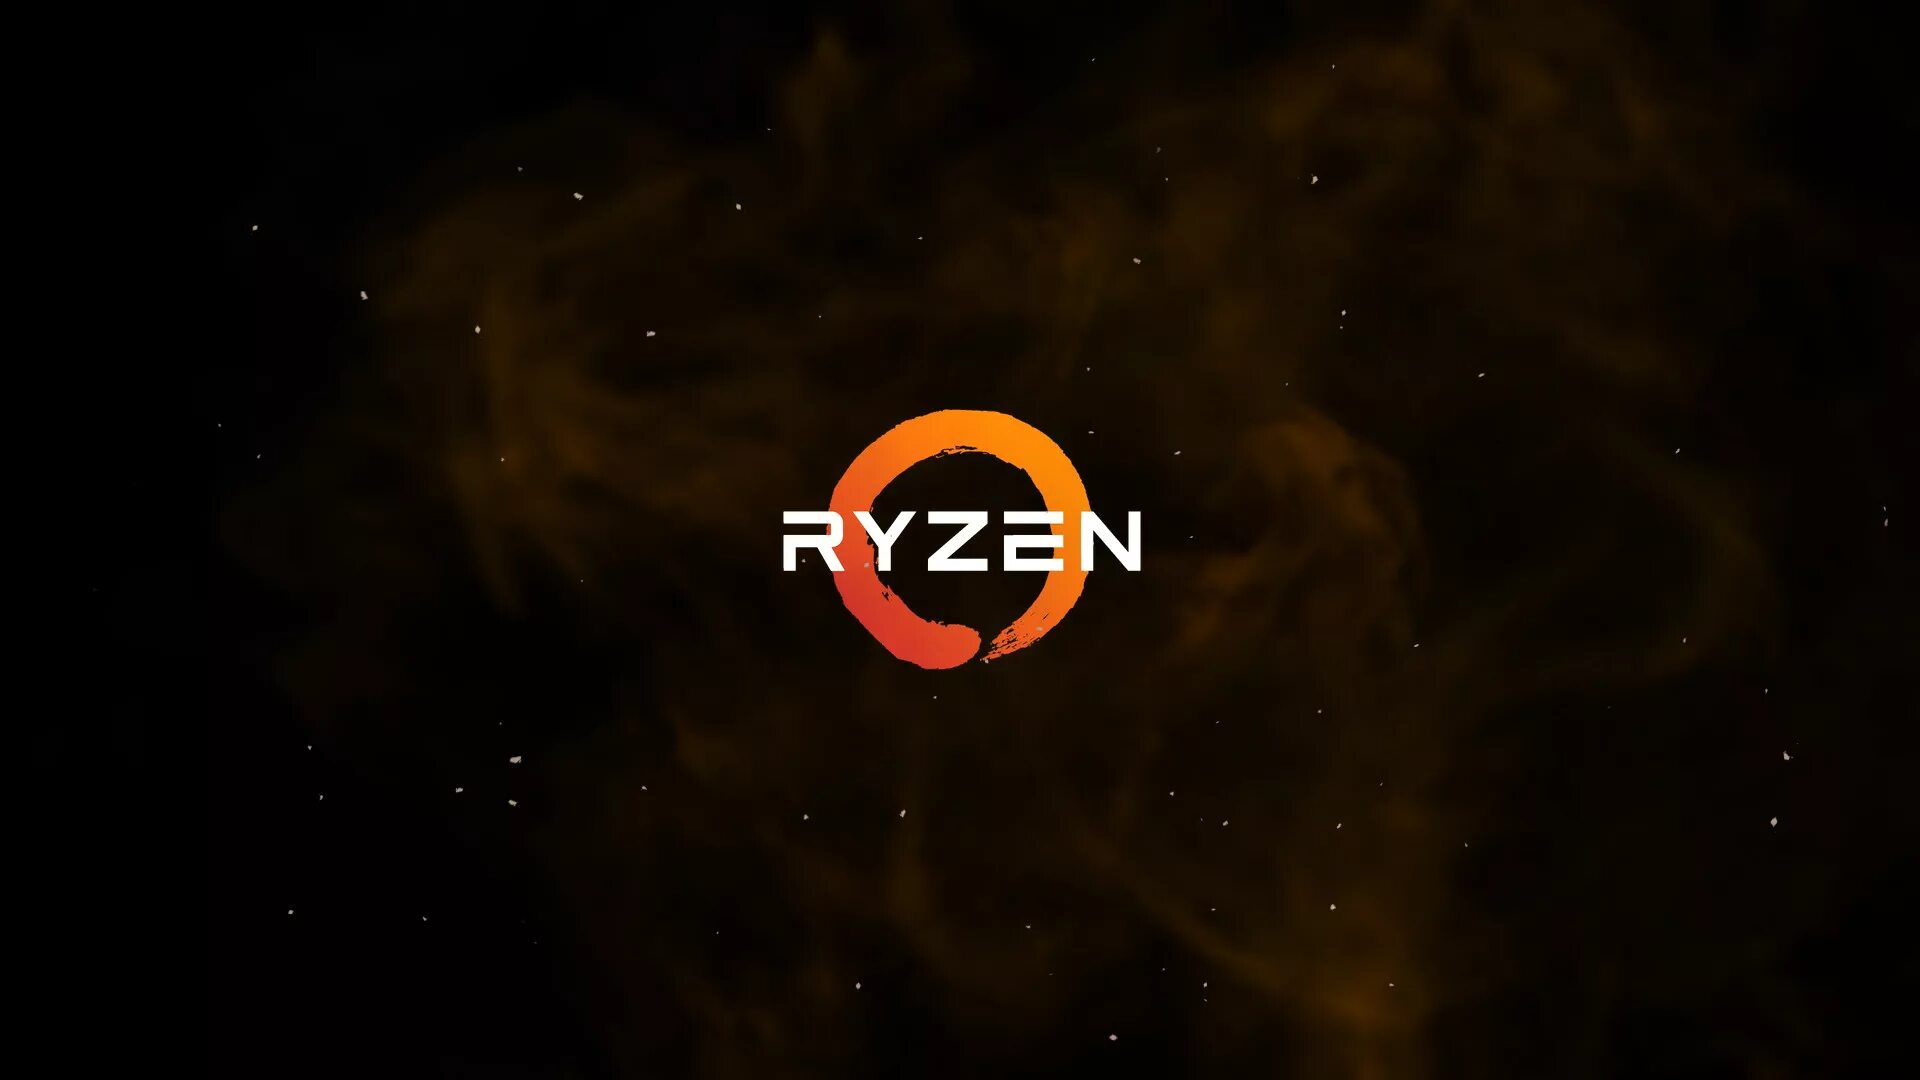 Ryzen 1920x1080. Ryzen логотип. Заставка Ryzen. Обои Ryzen 2k. Ryzen 5 заставка.